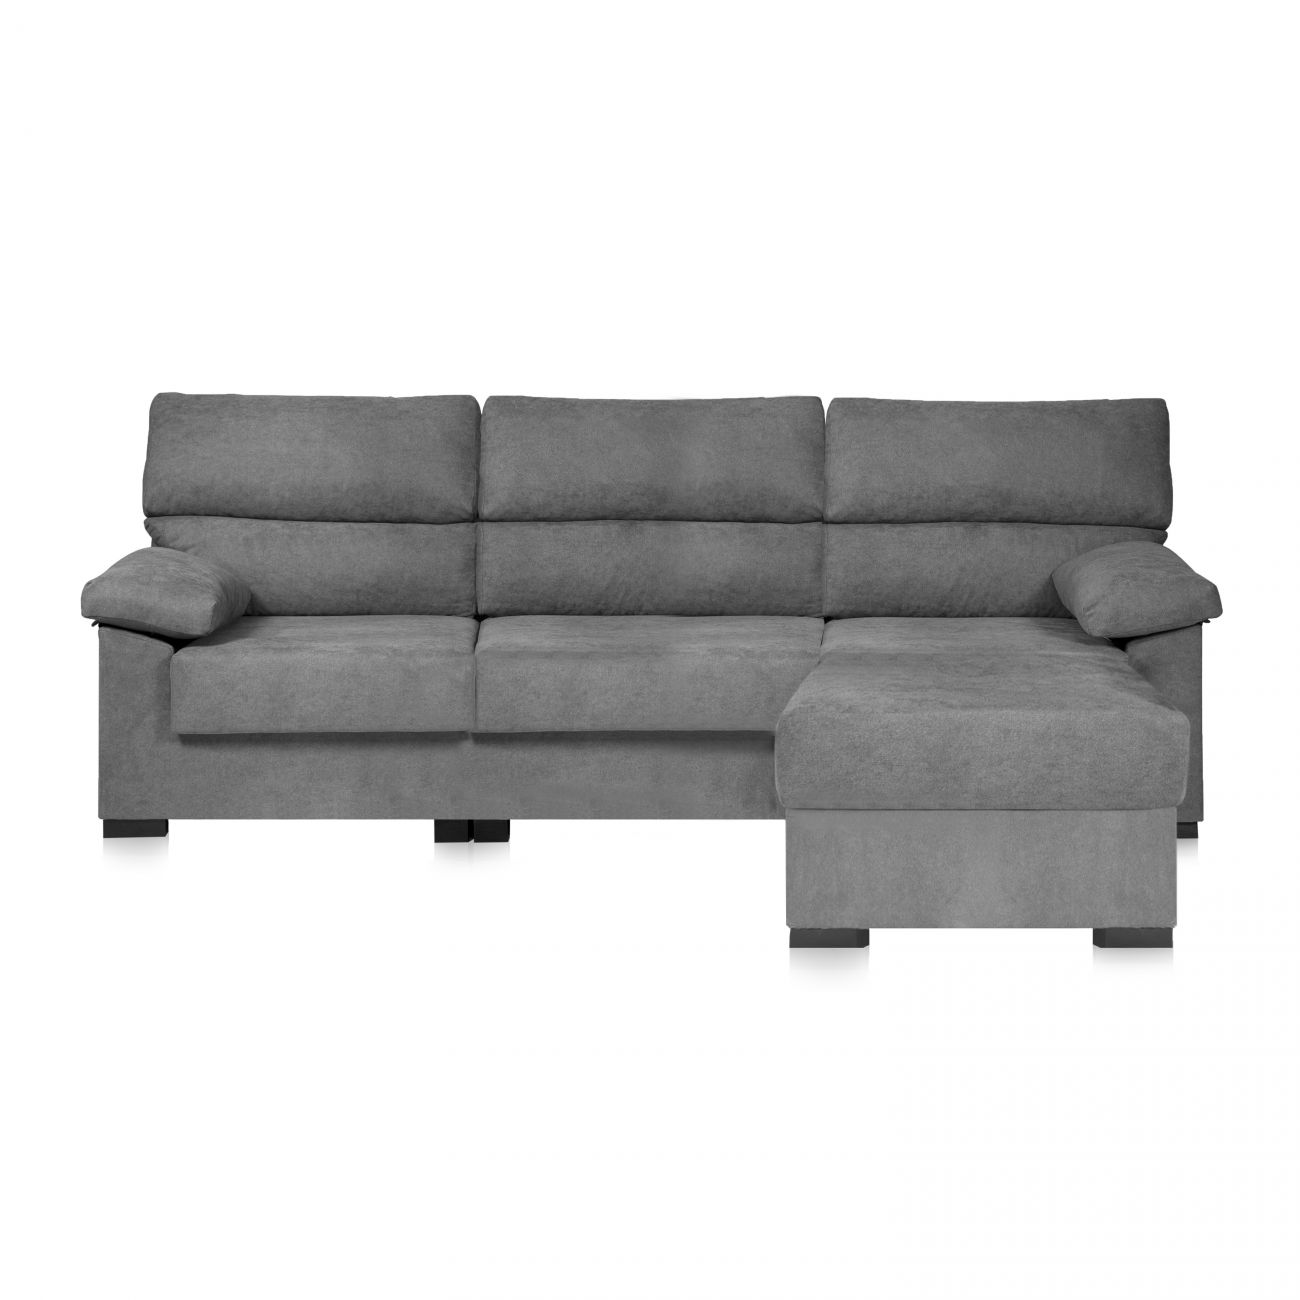 Comprar Sofá chaise longue Relax Génova 4 plazas 278 cm color cemento